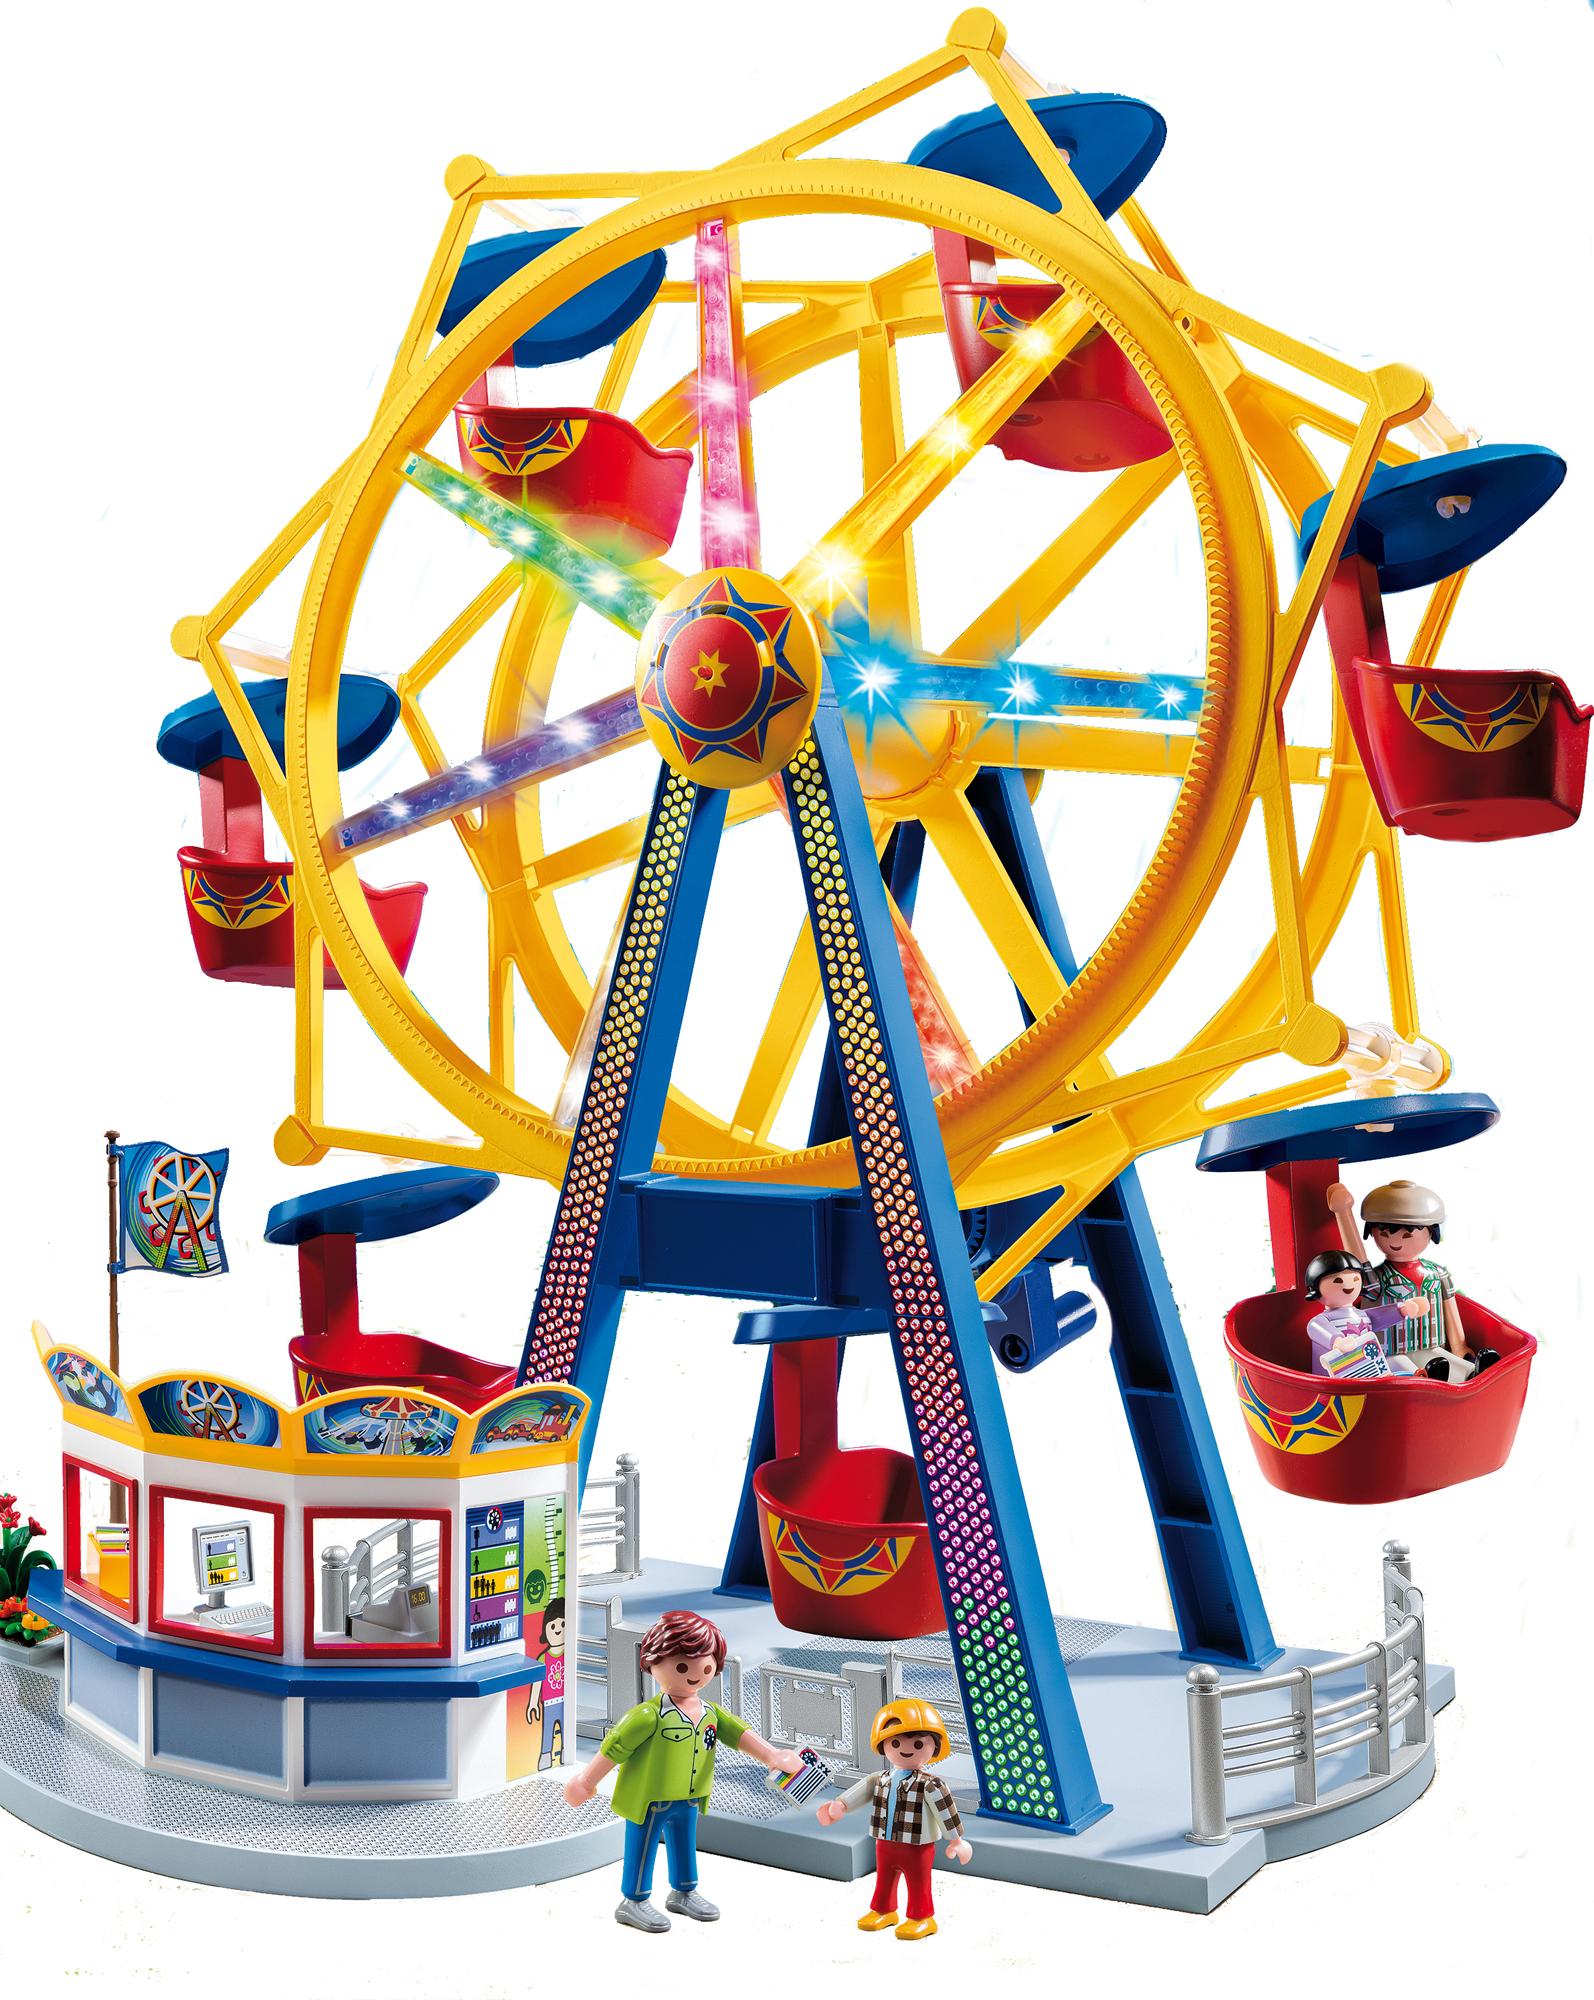 Amazon.com: PLAYMOBIL Ferris Wheel with Lights Set: Toys & Games